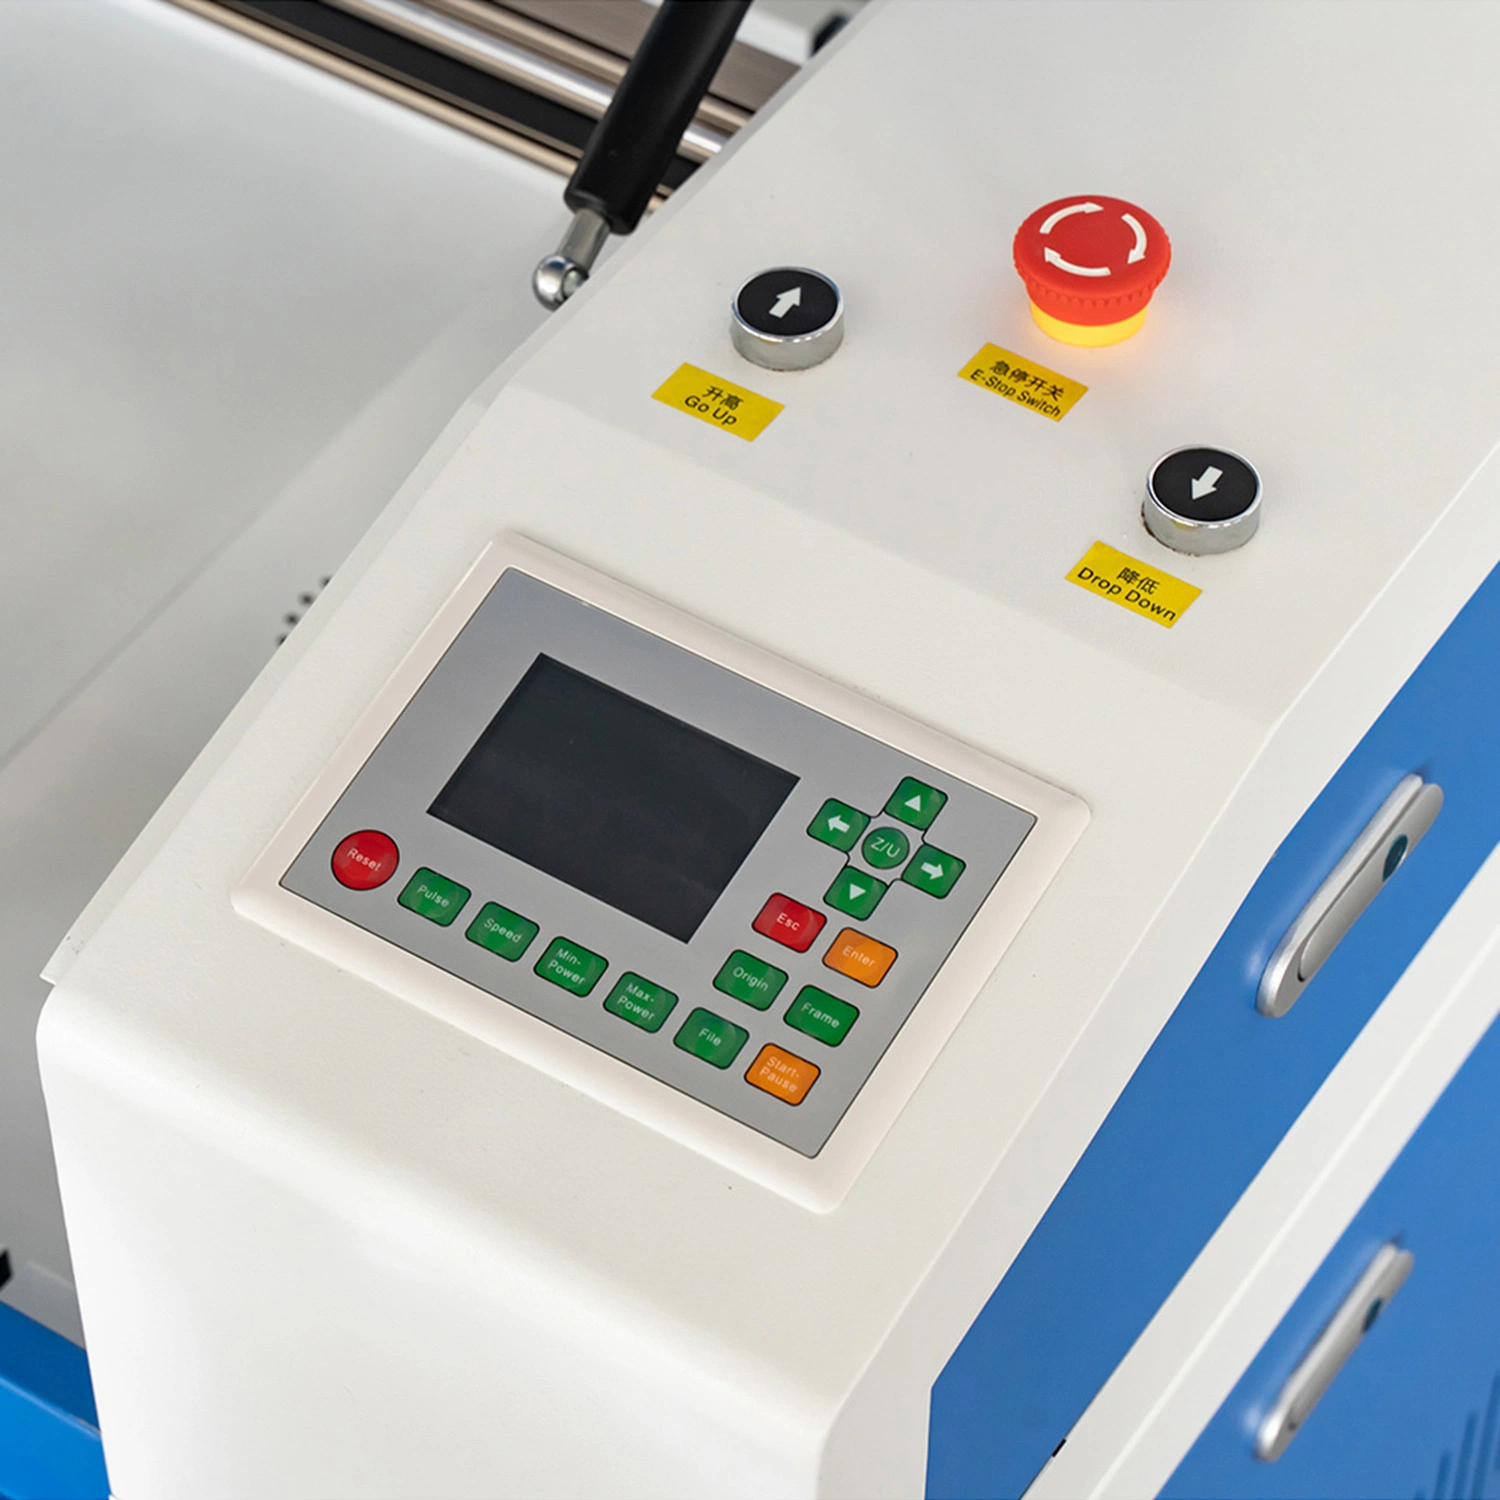 60W/100W Laser Cutting Machine 1060 CO2 Laser Engraving Machine for Wood